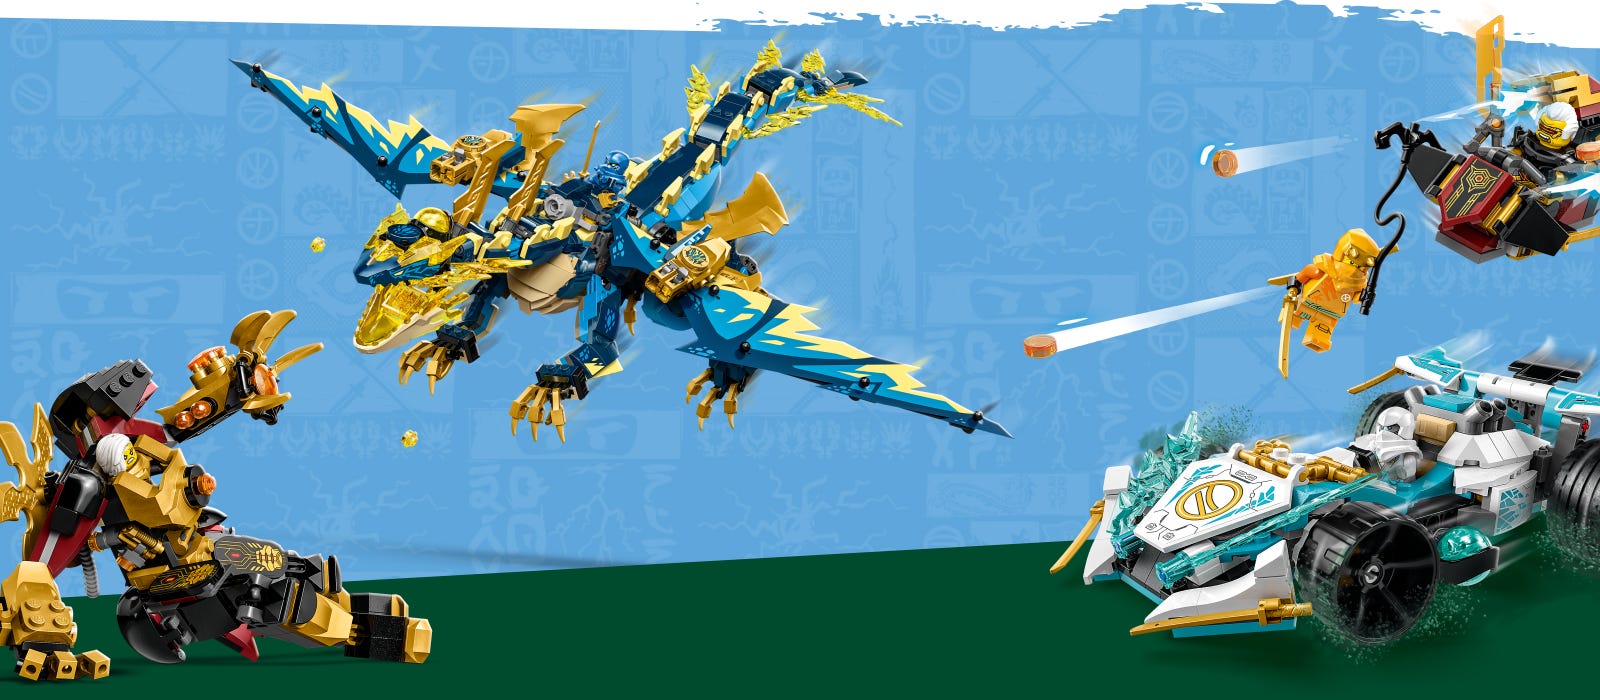 Five plot reveals in the LEGO NINJAGO Dragons Rising sets